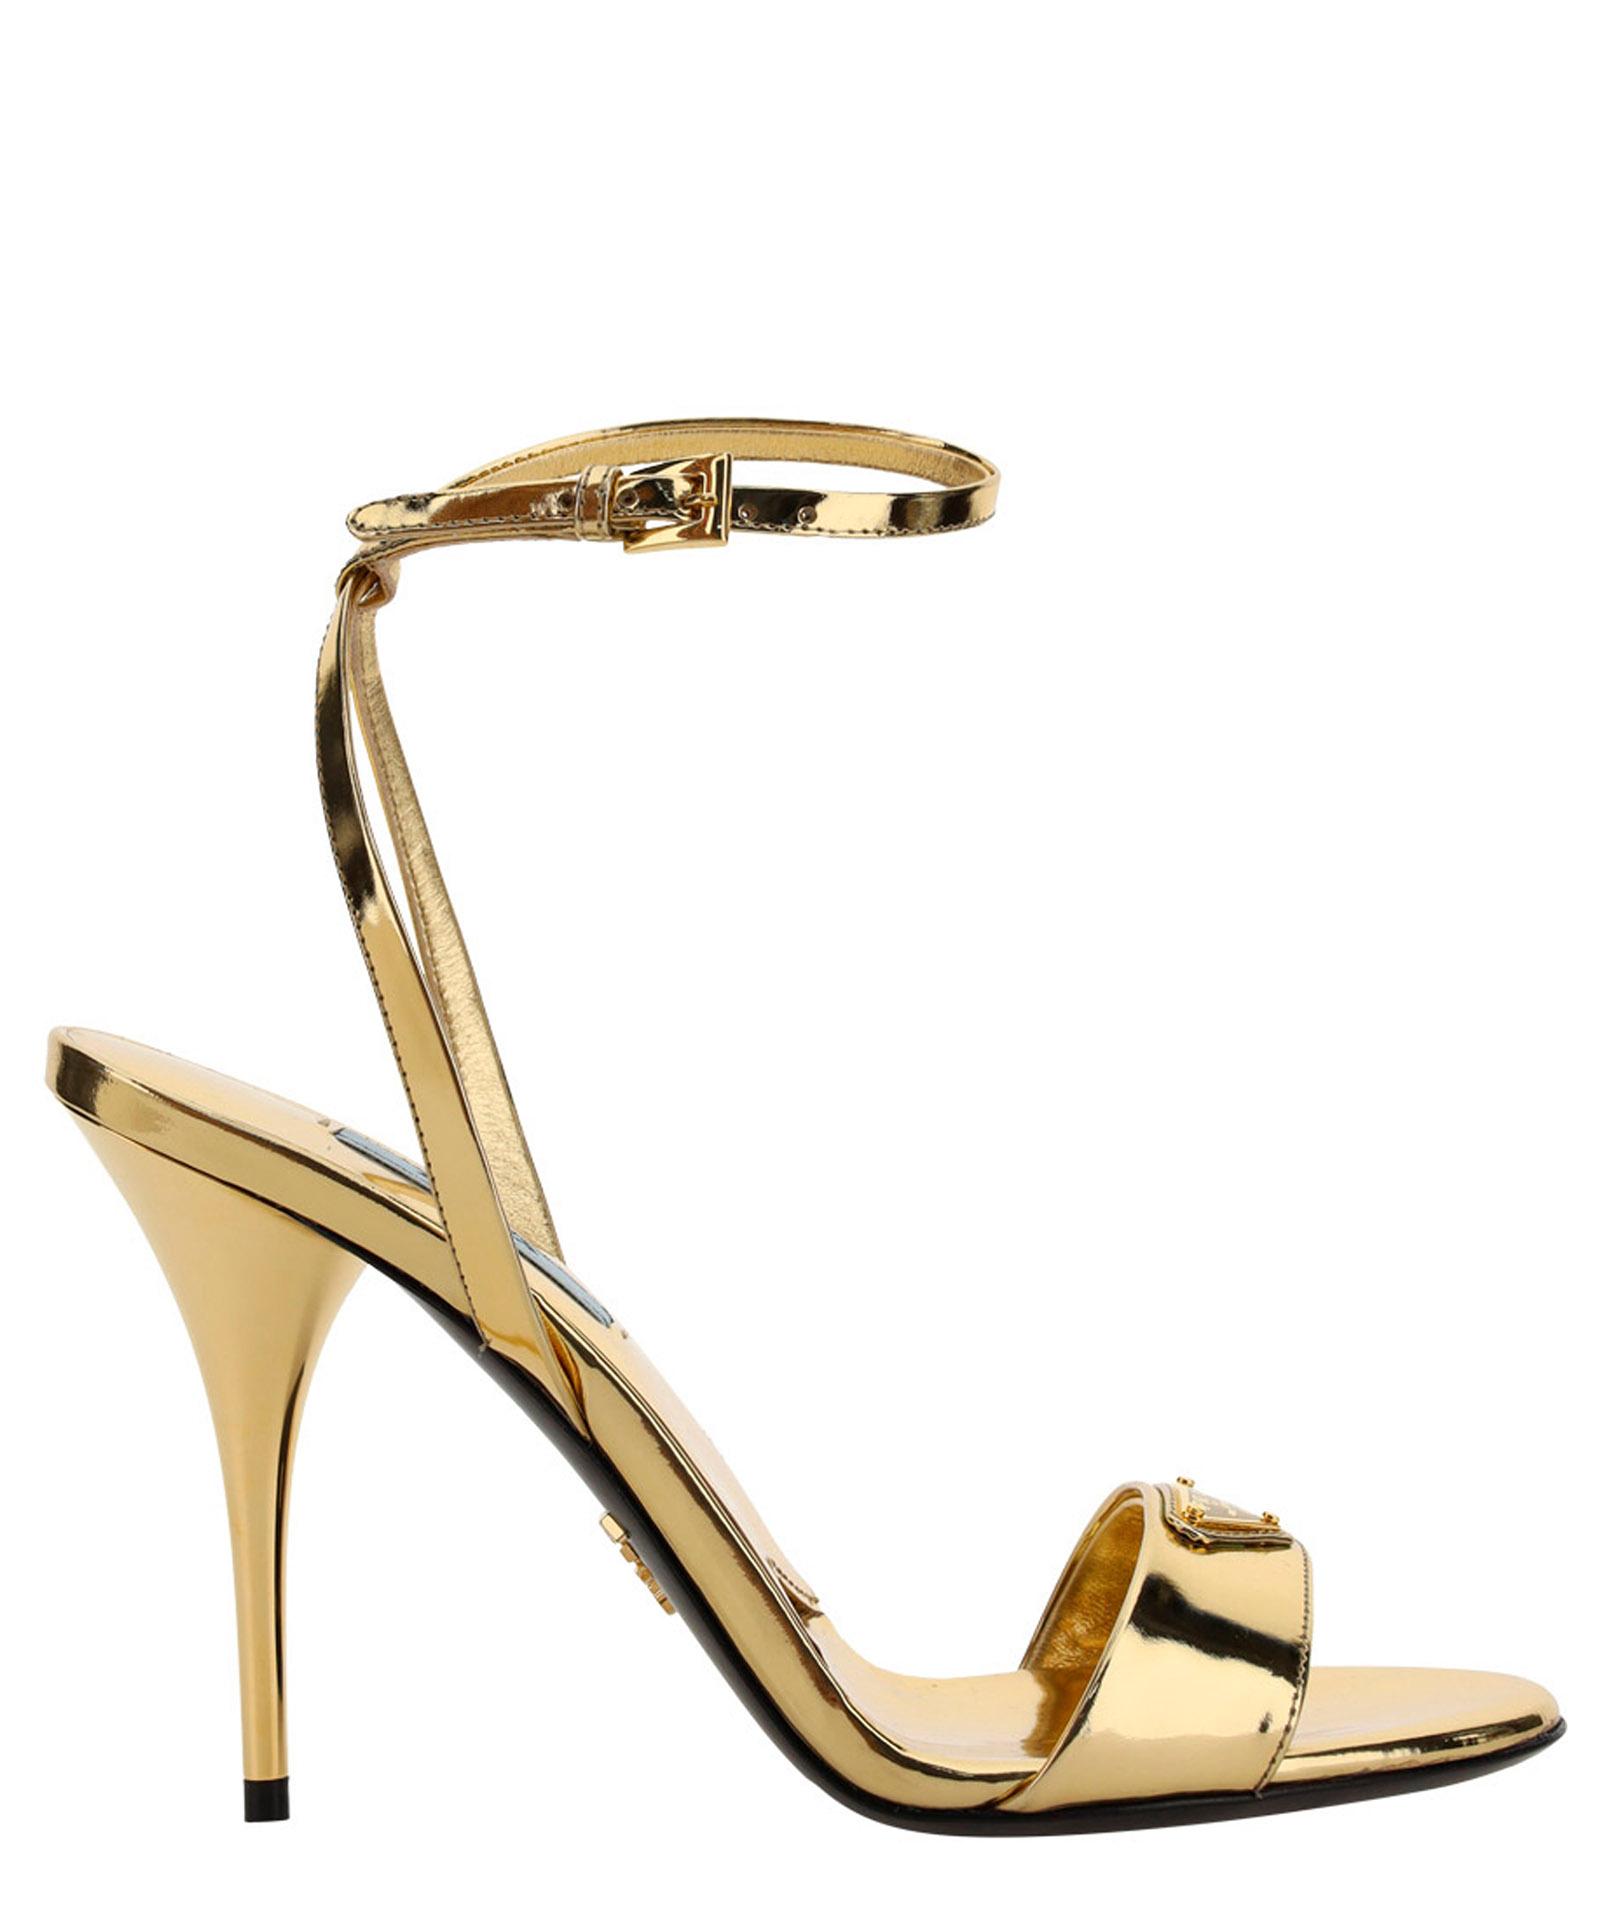 Prada Heeled Sandals in Metallic | Lyst